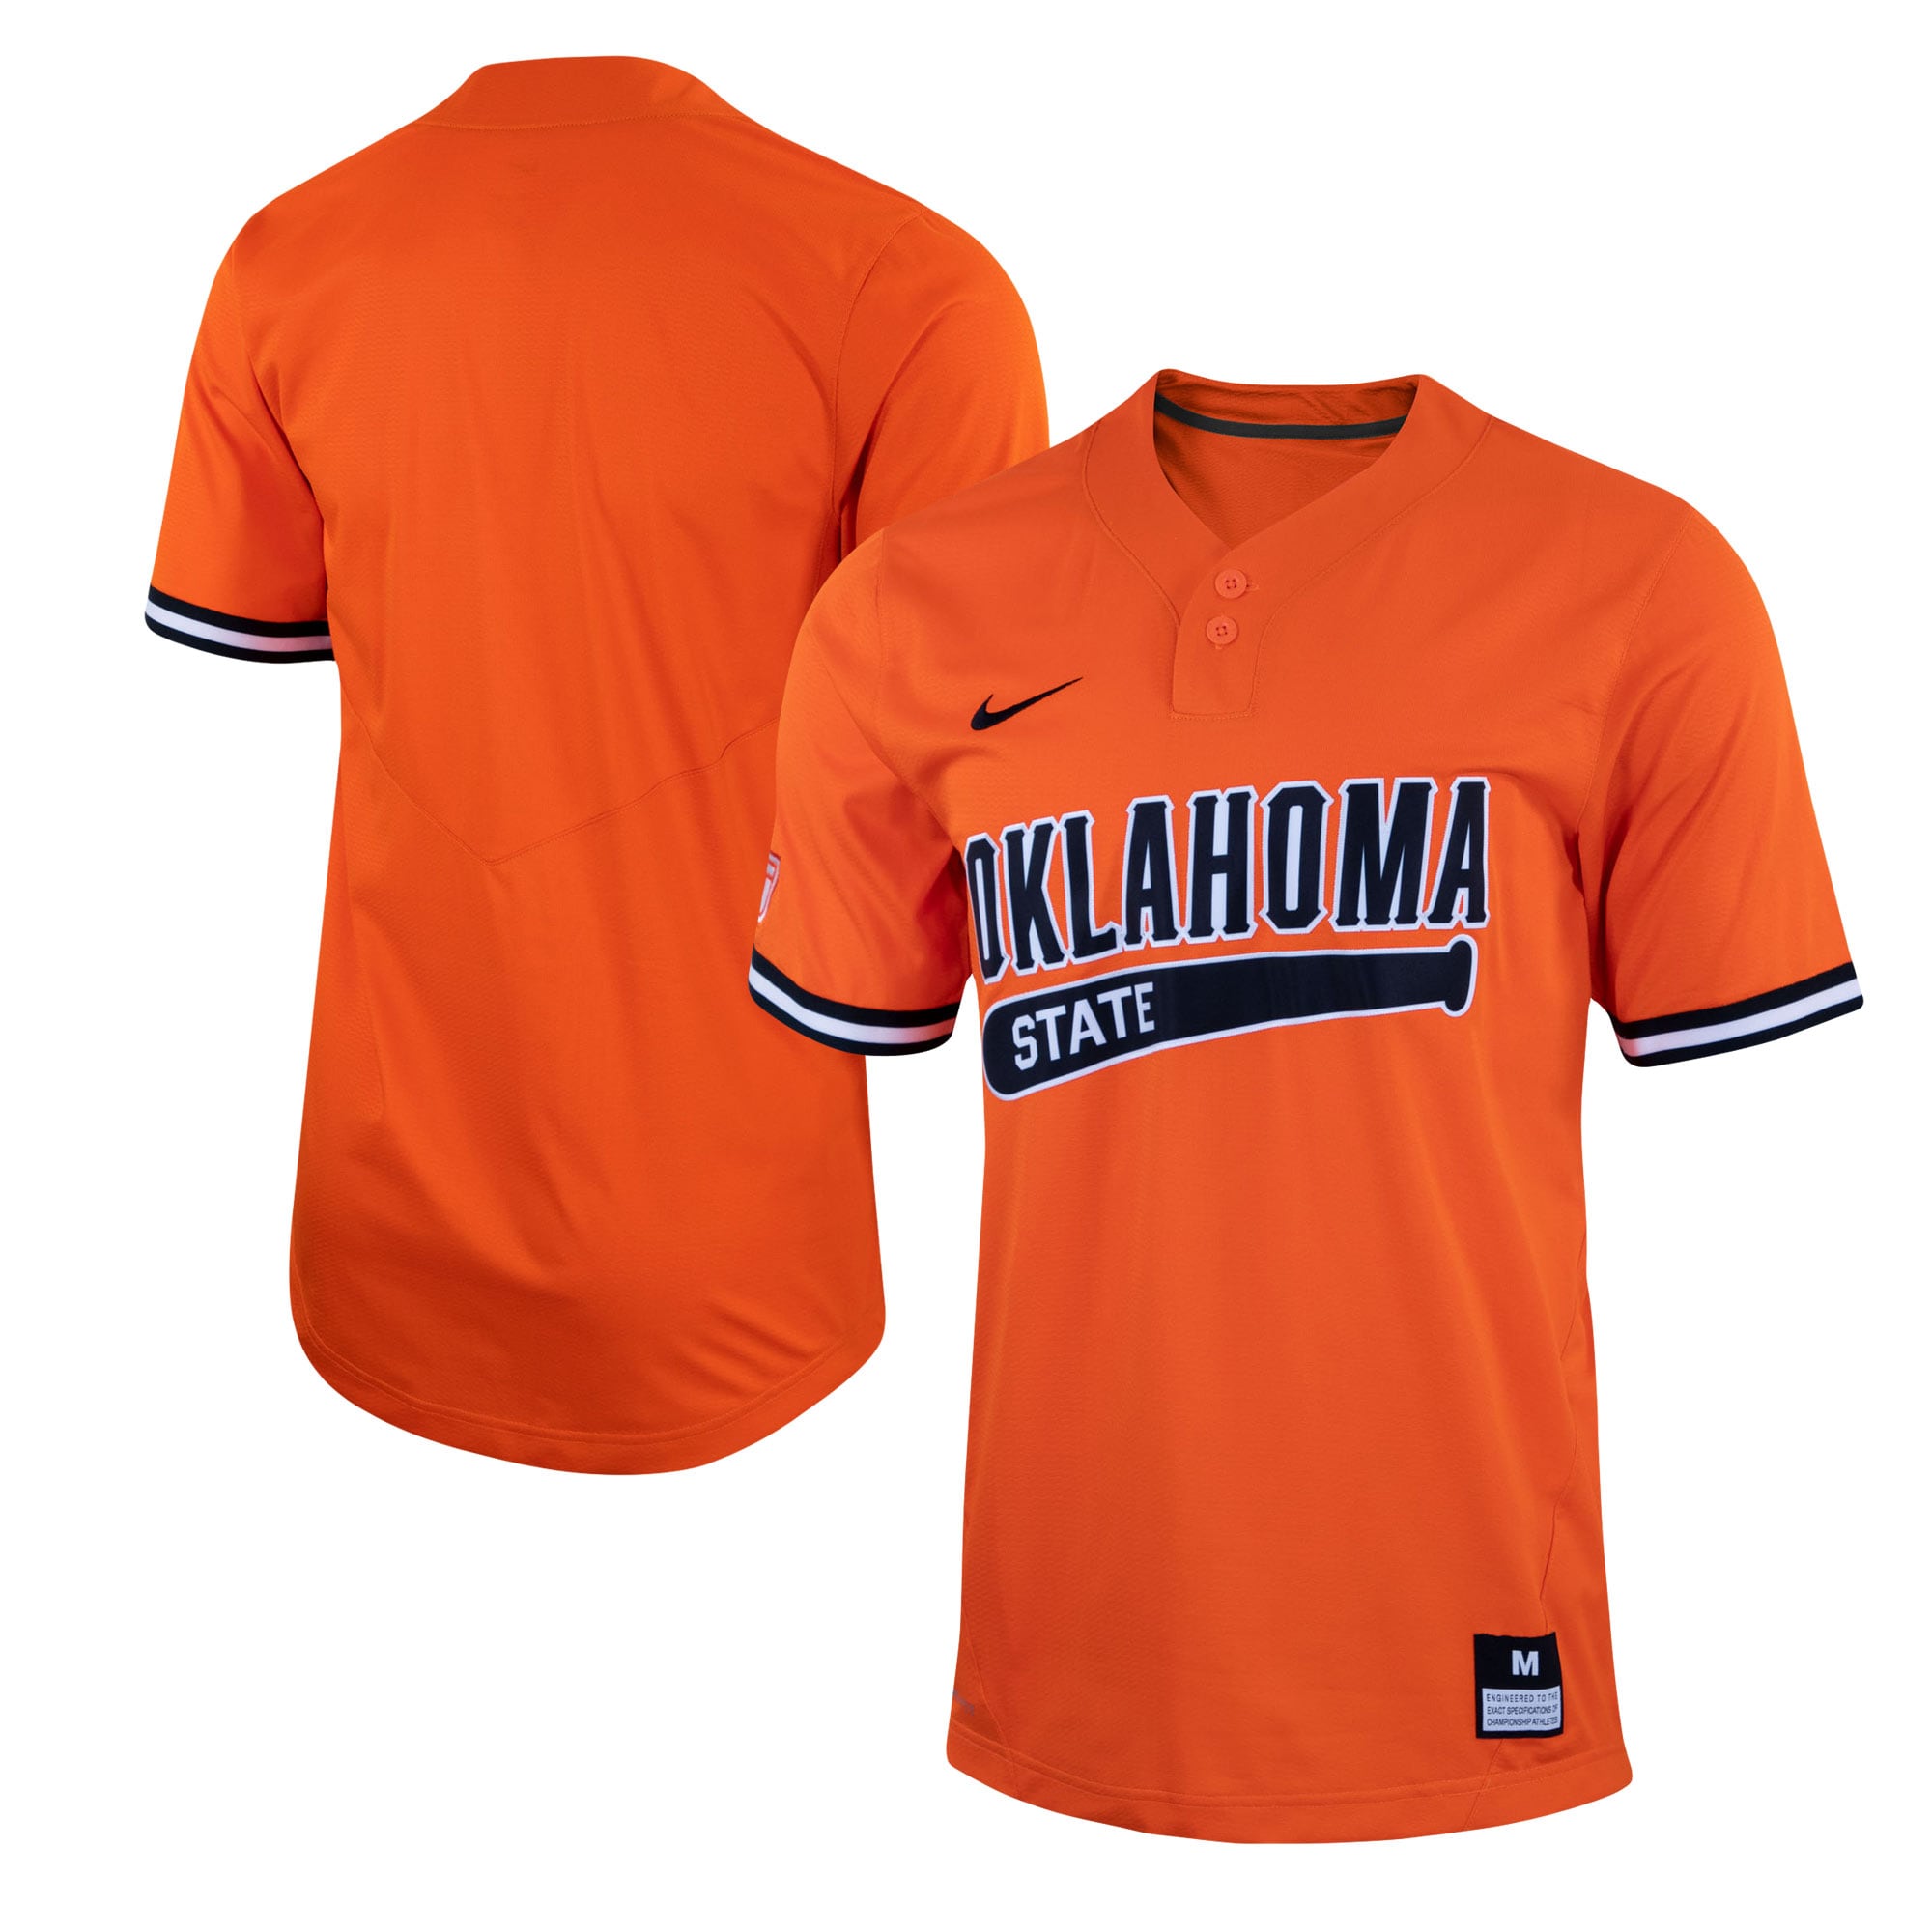 Oklahoma State Cowboys Two-Button Replica Baseball Jersey - Orange For Youth Women Men